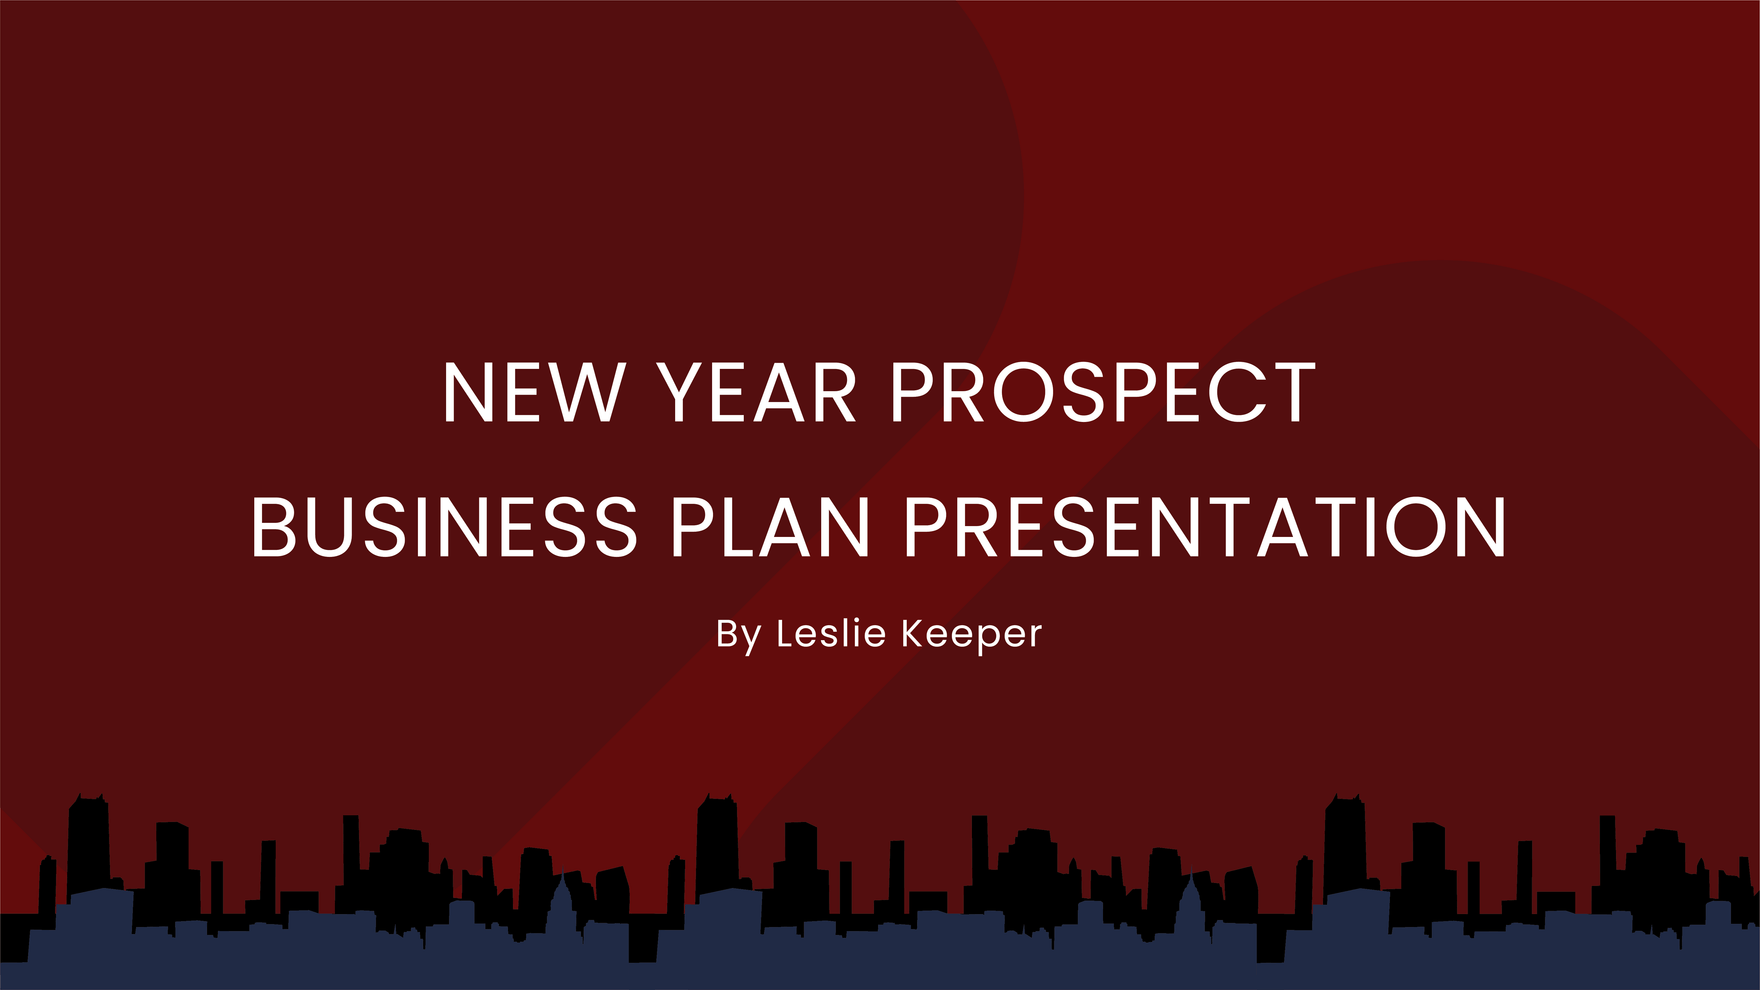 New Year Prospect Business Plan Presentation